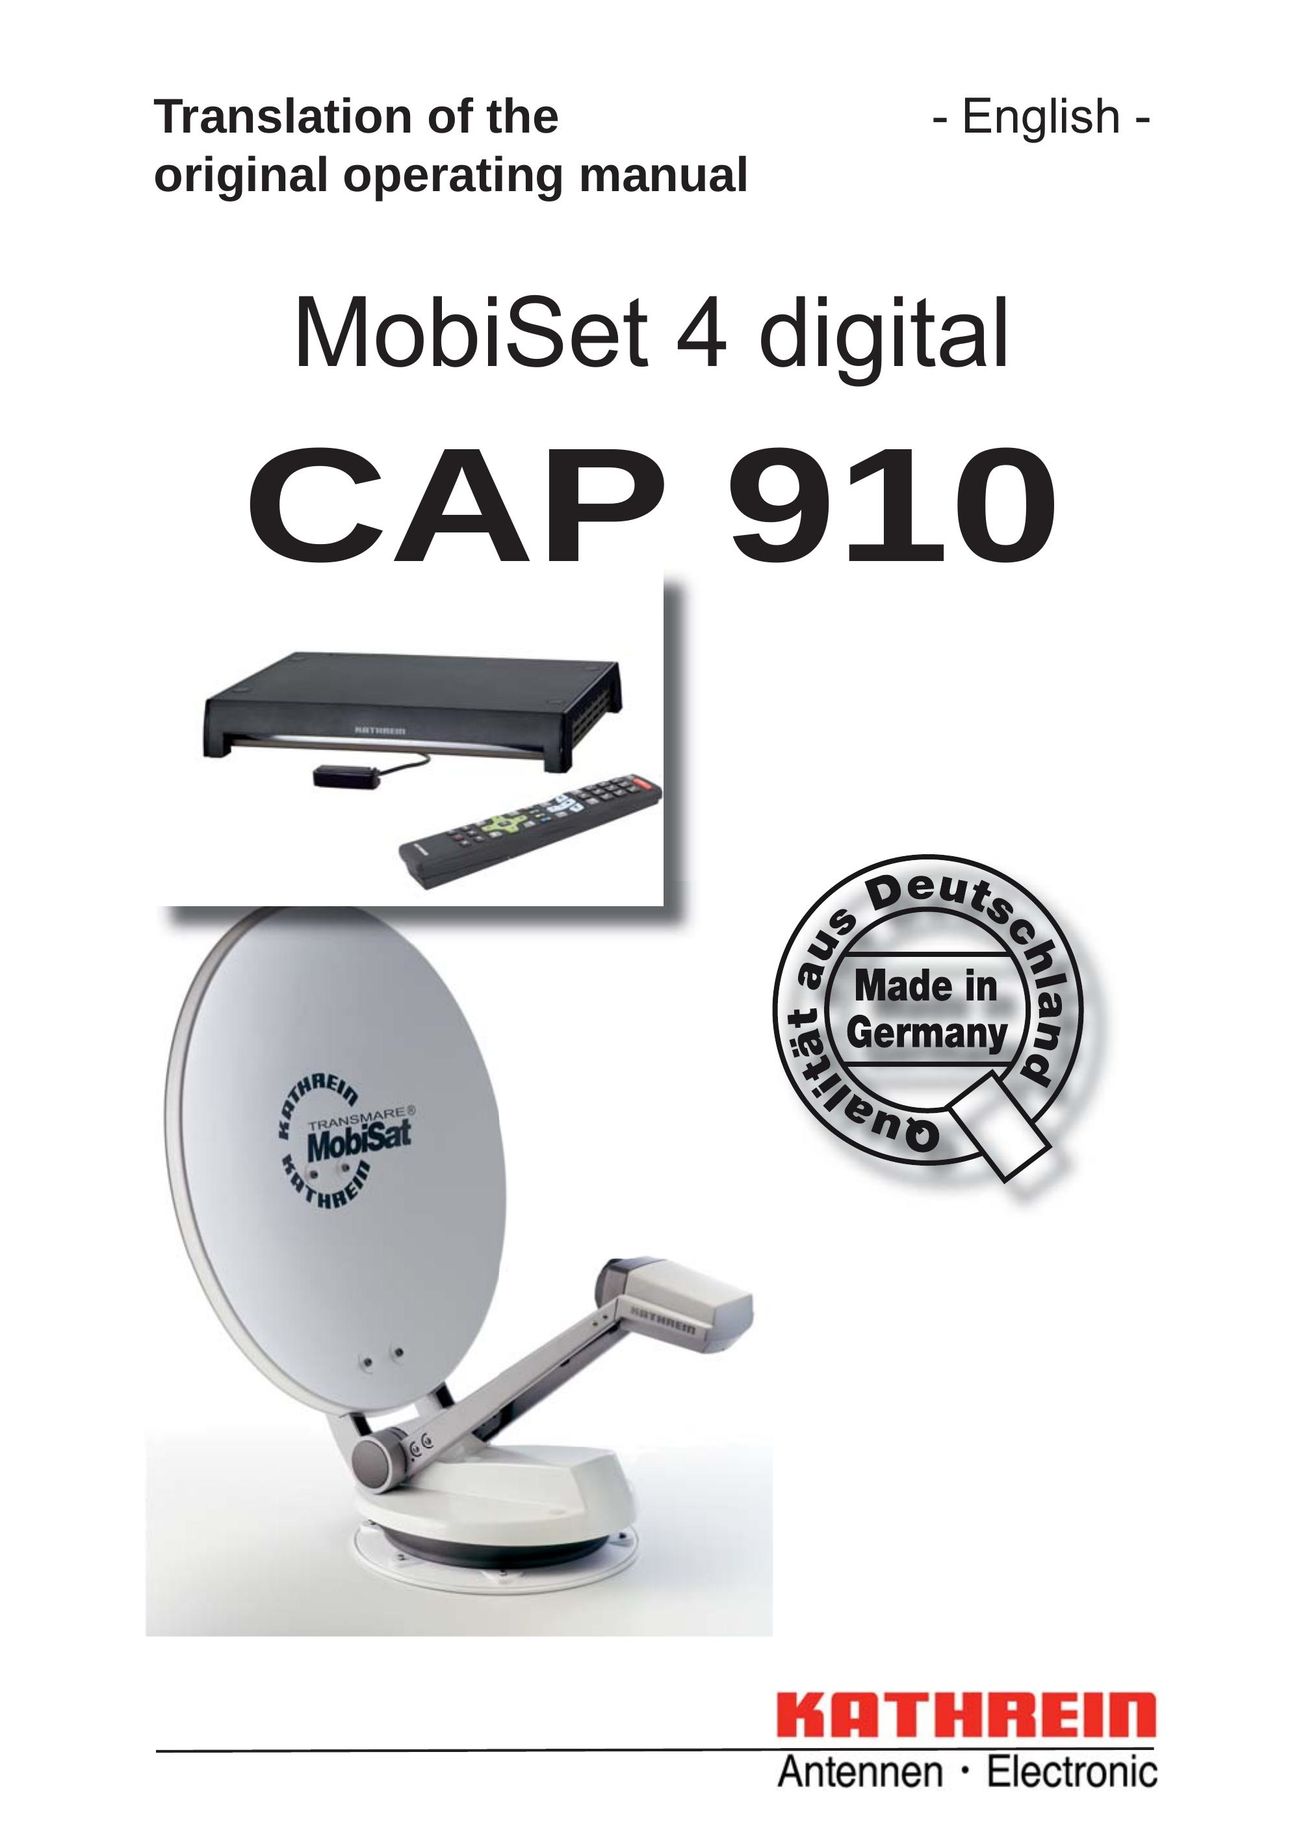 Kathrein cap910 Satellite TV System User Manual